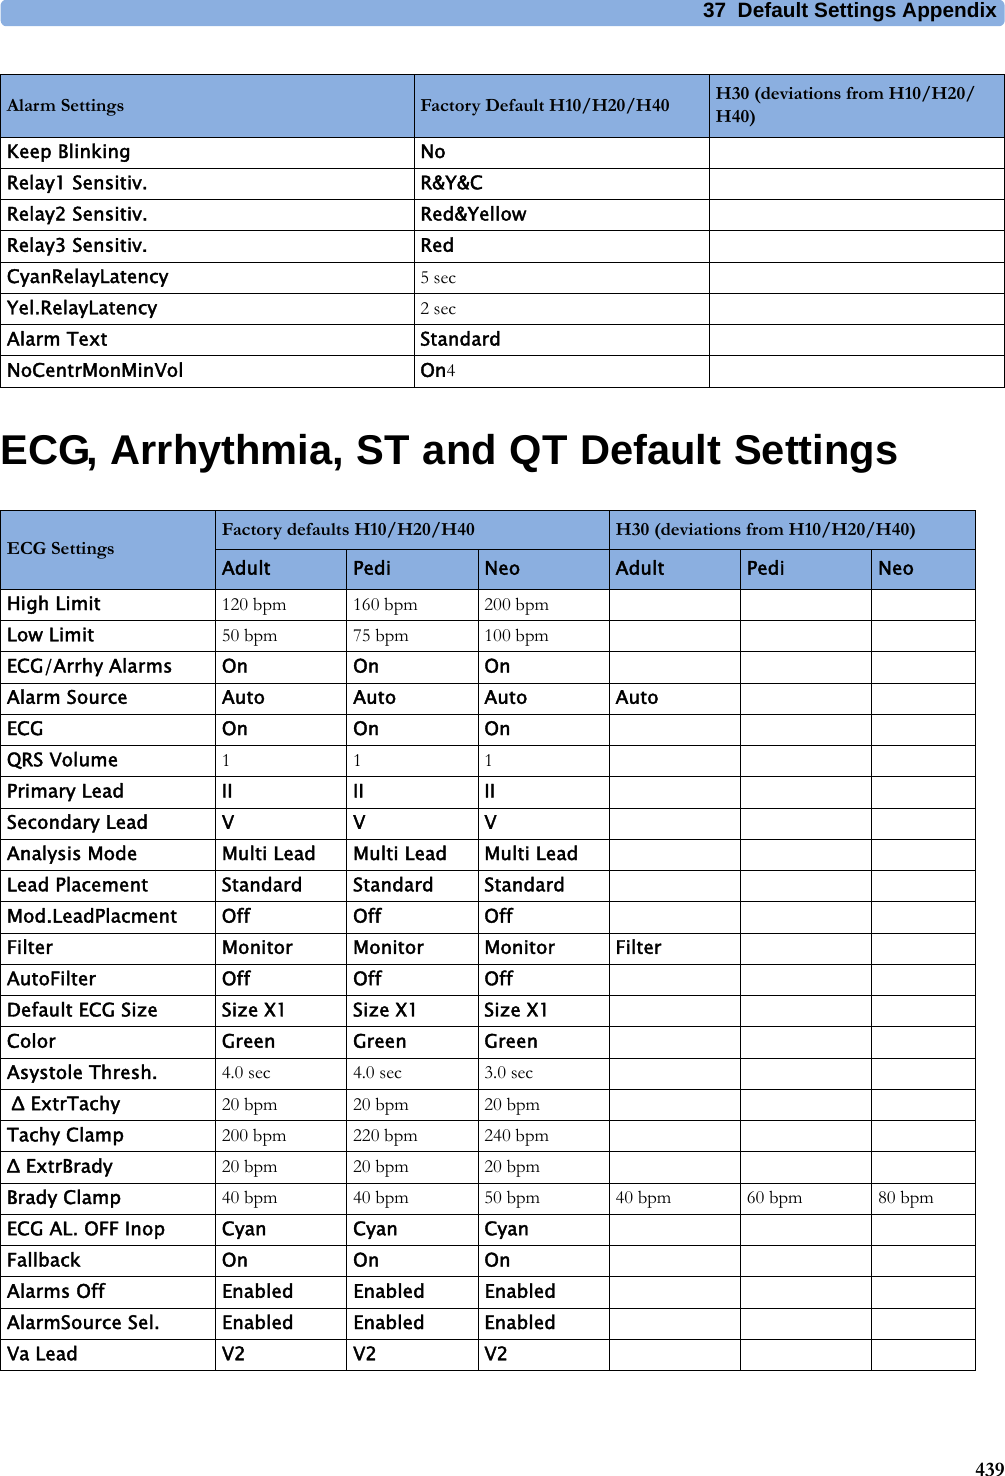 37 Default Settings Appendix439ECG, Arrhythmia, ST and QT Default SettingsKeep Blinking NoRelay1 Sensitiv. R&amp;Y&amp;CRelay2 Sensitiv. Red&amp;YellowRelay3 Sensitiv. RedCyanRelayLatency 5secYel.RelayLatency 2secAlarm Text StandardNoCentrMonMinVol On4Alarm Settings Factory Default H10/H20/H40 H30 (deviations from H10/H20/H40)ECG SettingsFactory defaults H10/H20/H40 H30 (deviations from H10/H20/H40)Adult Pedi Neo Adult Pedi NeoHigh Limit 120 bpm 160 bpm 200 bpmLow Limit 50 bpm 75 bpm 100 bpmECG/Arrhy Alarms On On OnAlarm Source Auto Auto Auto AutoECG OnOnOnQRS Volume 111Primary Lead II II IISecondary Lead V V VAnalysis Mode Multi Lead Multi Lead Multi LeadLead Placement Standard Standard StandardMod.LeadPlacment Off Off OffFilter Monitor Monitor Monitor FilterAutoFilter Off Off OffDefault ECG Size Size X1 Size X1 Size X1Color Green Green GreenAsystole Thresh. 4.0 sec 4.0 sec 3.0 sec Δ ExtrTachy 20 bpm 20 bpm 20 bpmTachy Clamp 200 bpm 220 bpm 240 bpmΔ ExtrBrady  20 bpm 20 bpm 20 bpmBrady Clamp 40 bpm 40 bpm 50 bpm 40 bpm 60 bpm 80 bpmECG AL. OFF Inop Cyan Cyan CyanFallback On On OnAlarms Off Enabled Enabled EnabledAlarmSource Sel. Enabled Enabled EnabledVa Lead V2 V2 V2